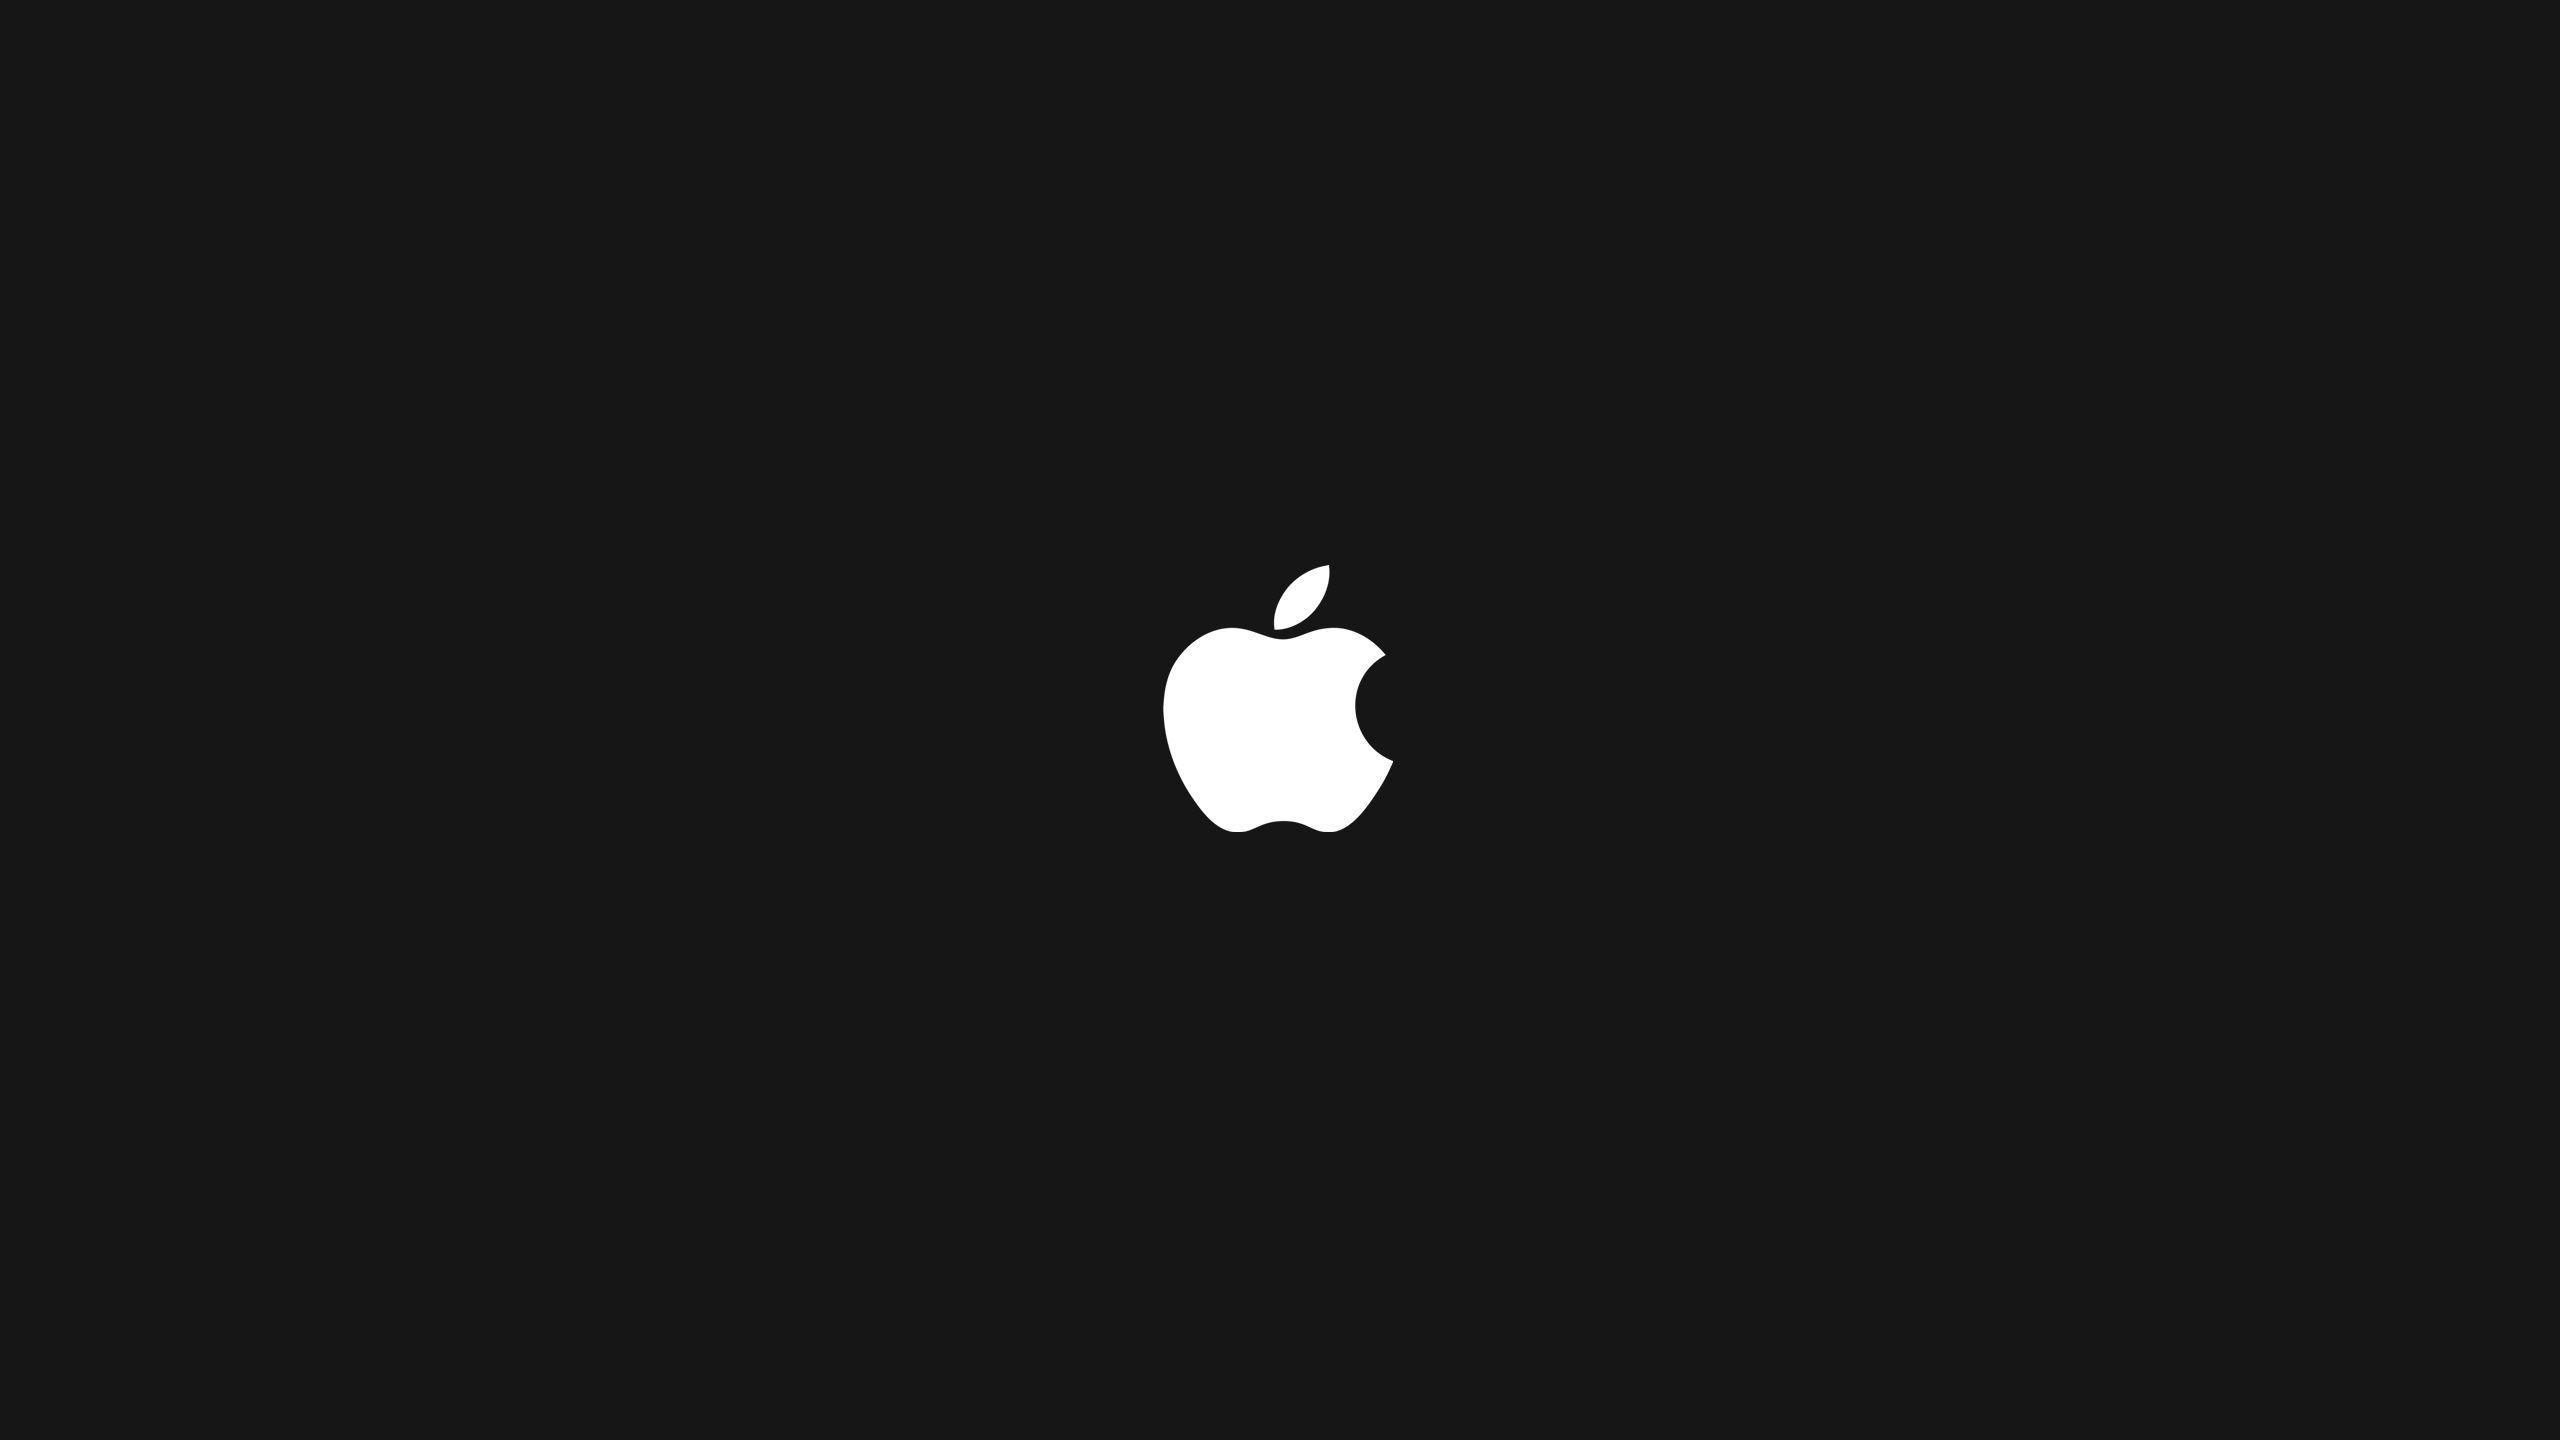 Download 20 Excellent Apple Logo Wallpaper